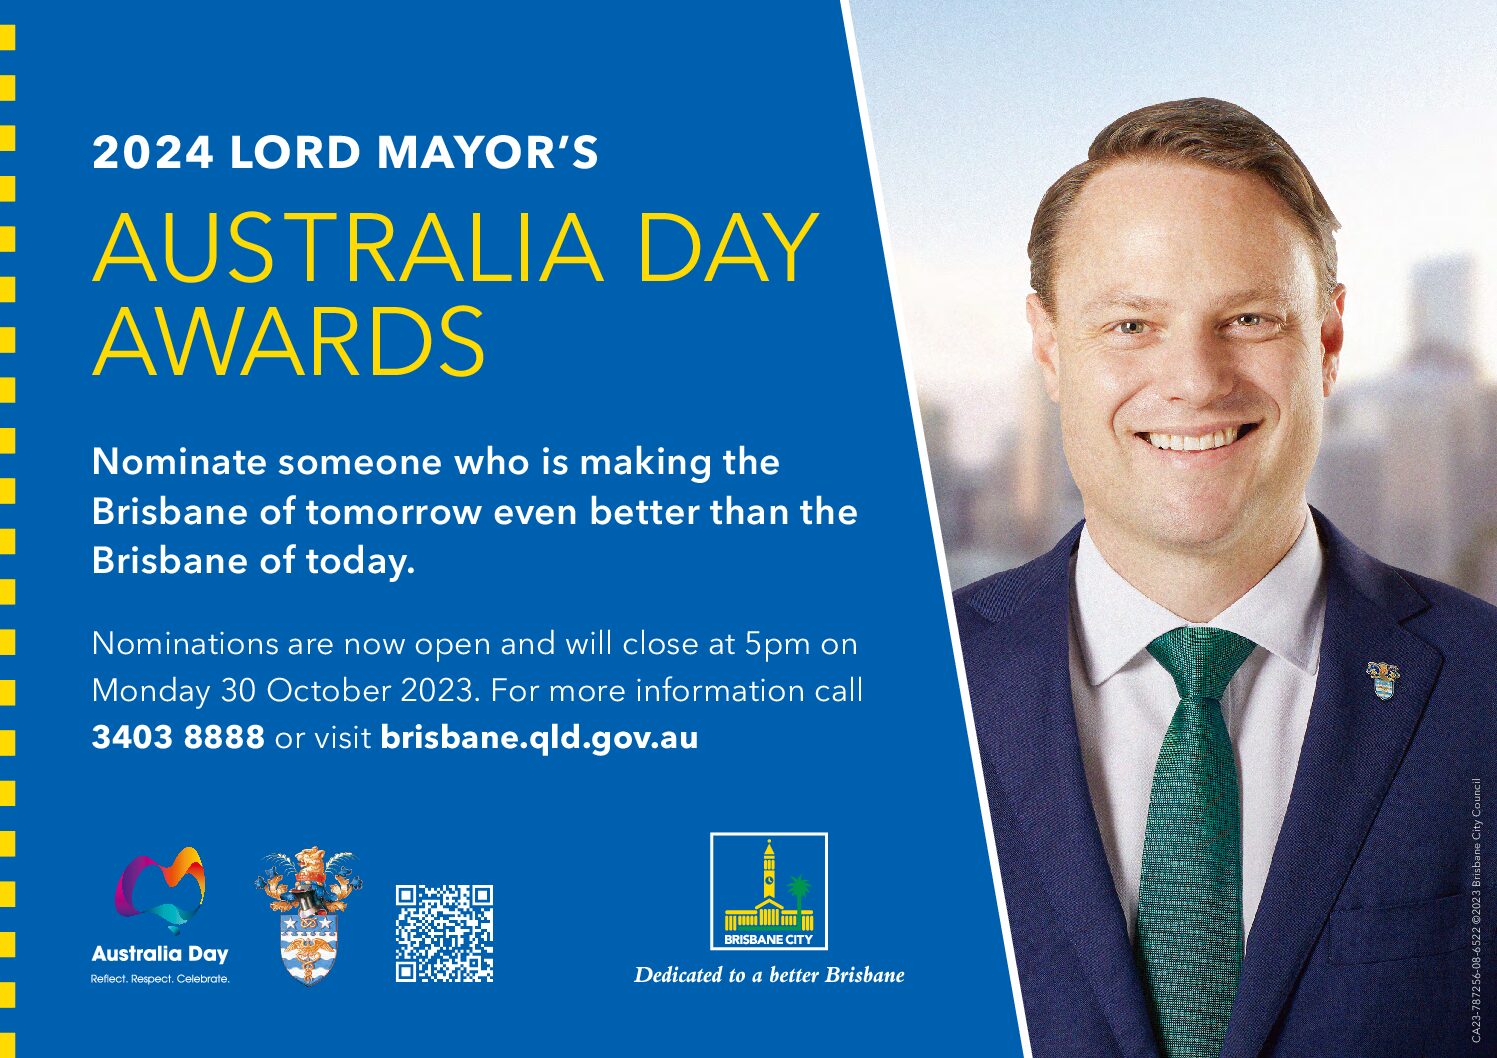 Nominate your suburban superhero for the Lord Mayor’s Australia Day Awards 2024